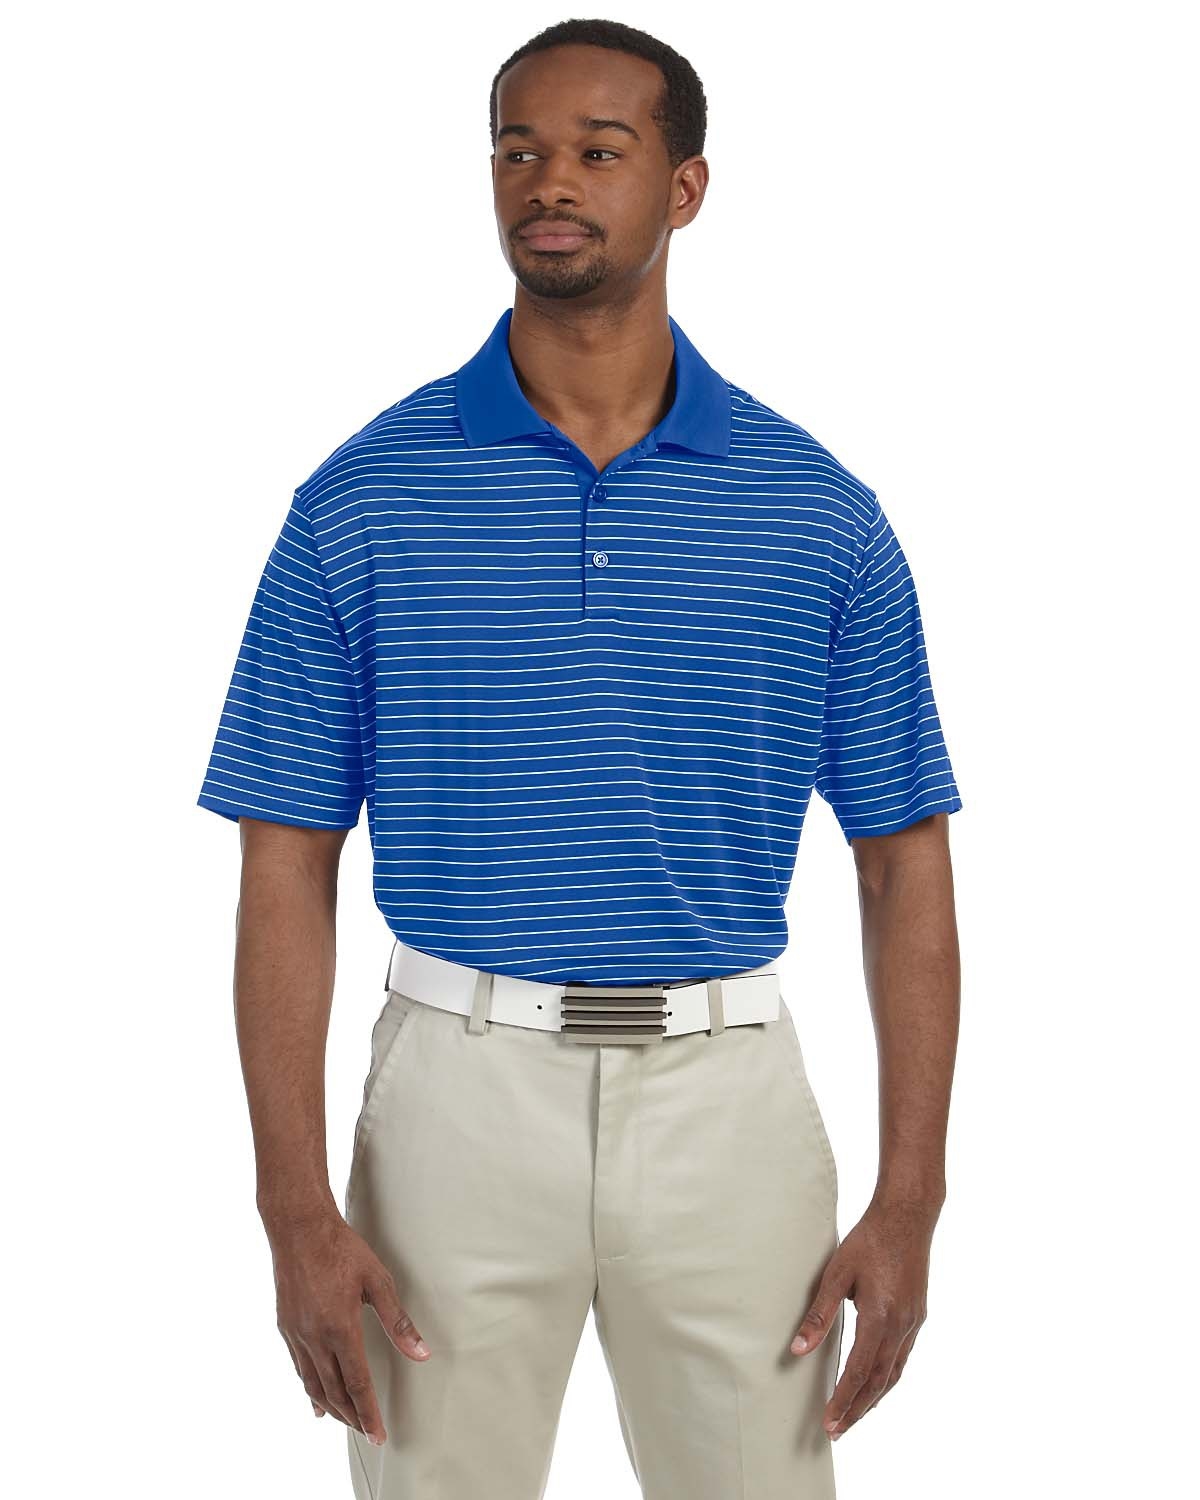 ventil Sway skadedyr adidas Golf A160 Men's climalite Pencil Stripe Polo Shirts